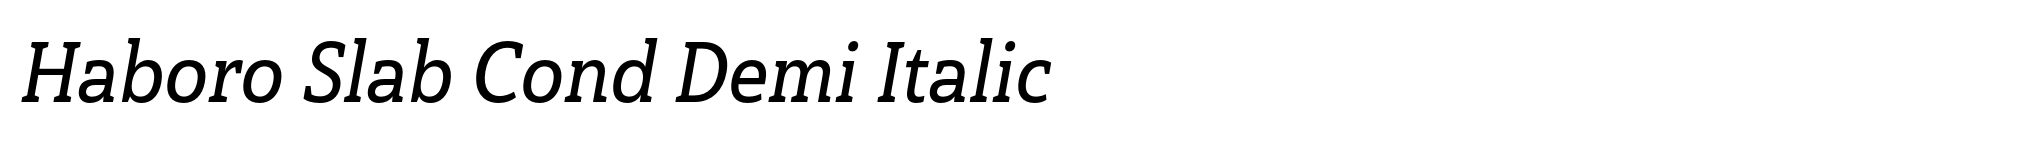 Haboro Slab Cond Demi Italic image